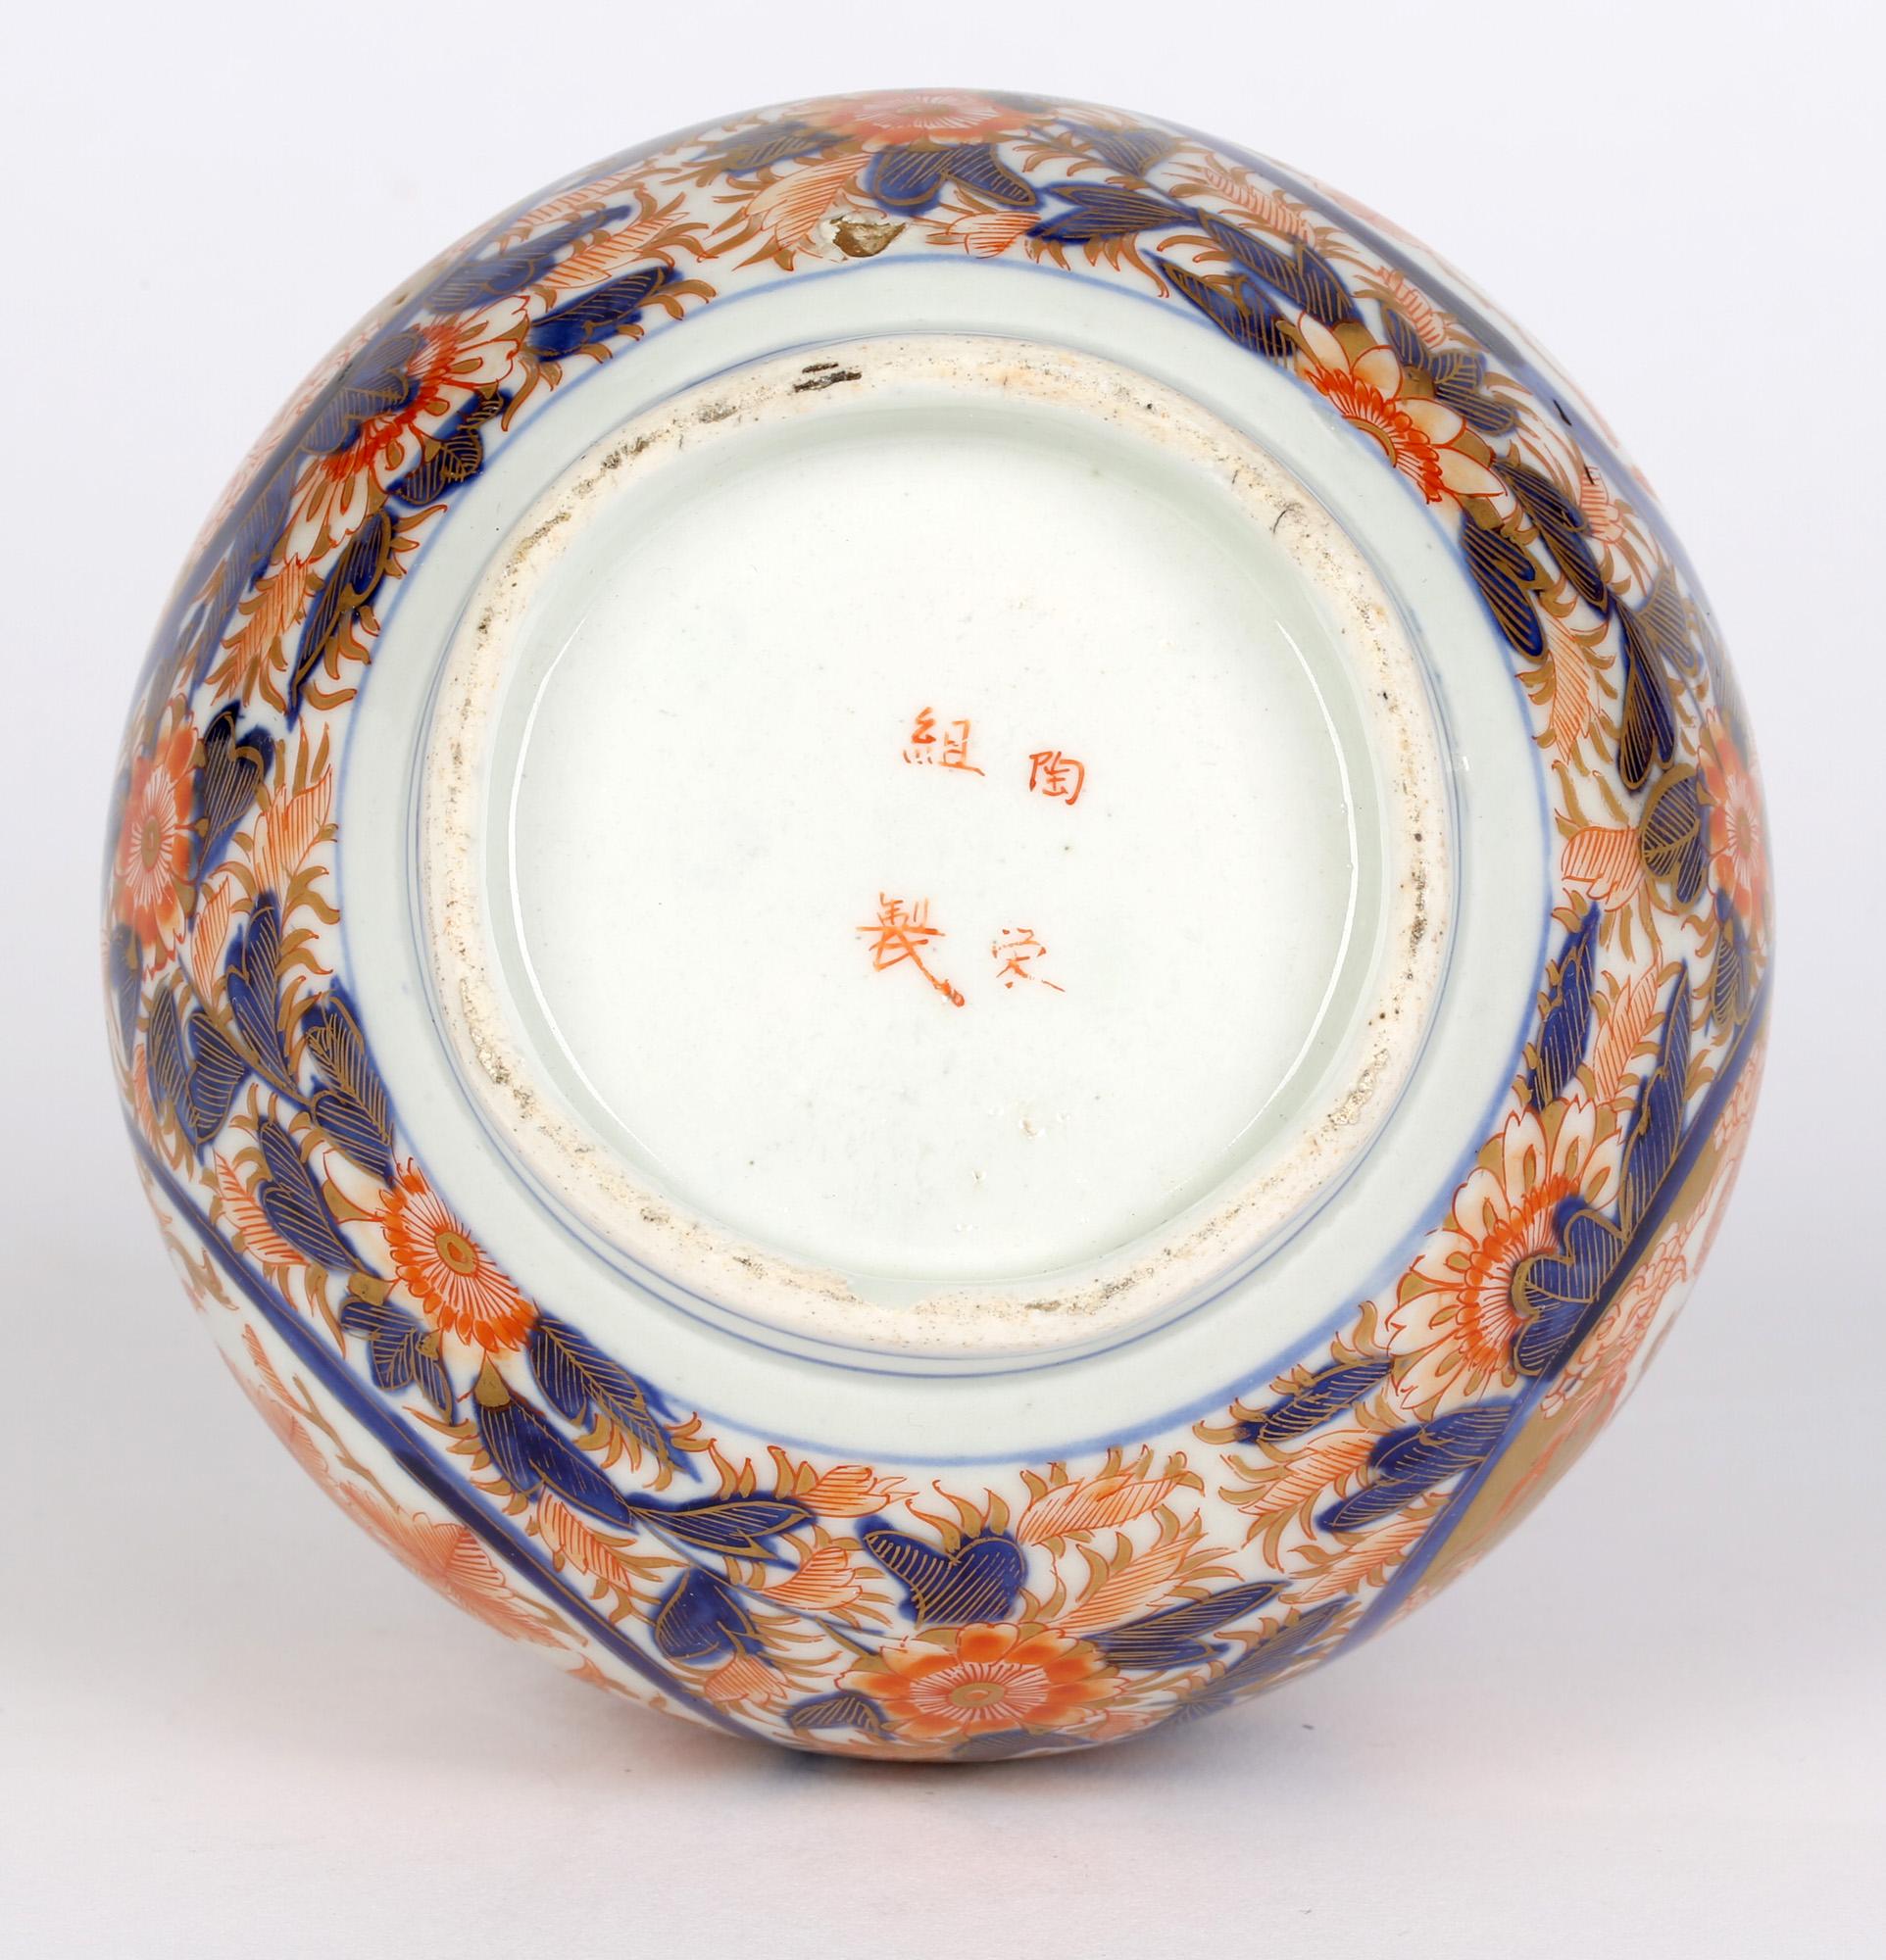 Japanese Imari Porcelain Bottle Vase with Dragons and Ho Ho Birds 1